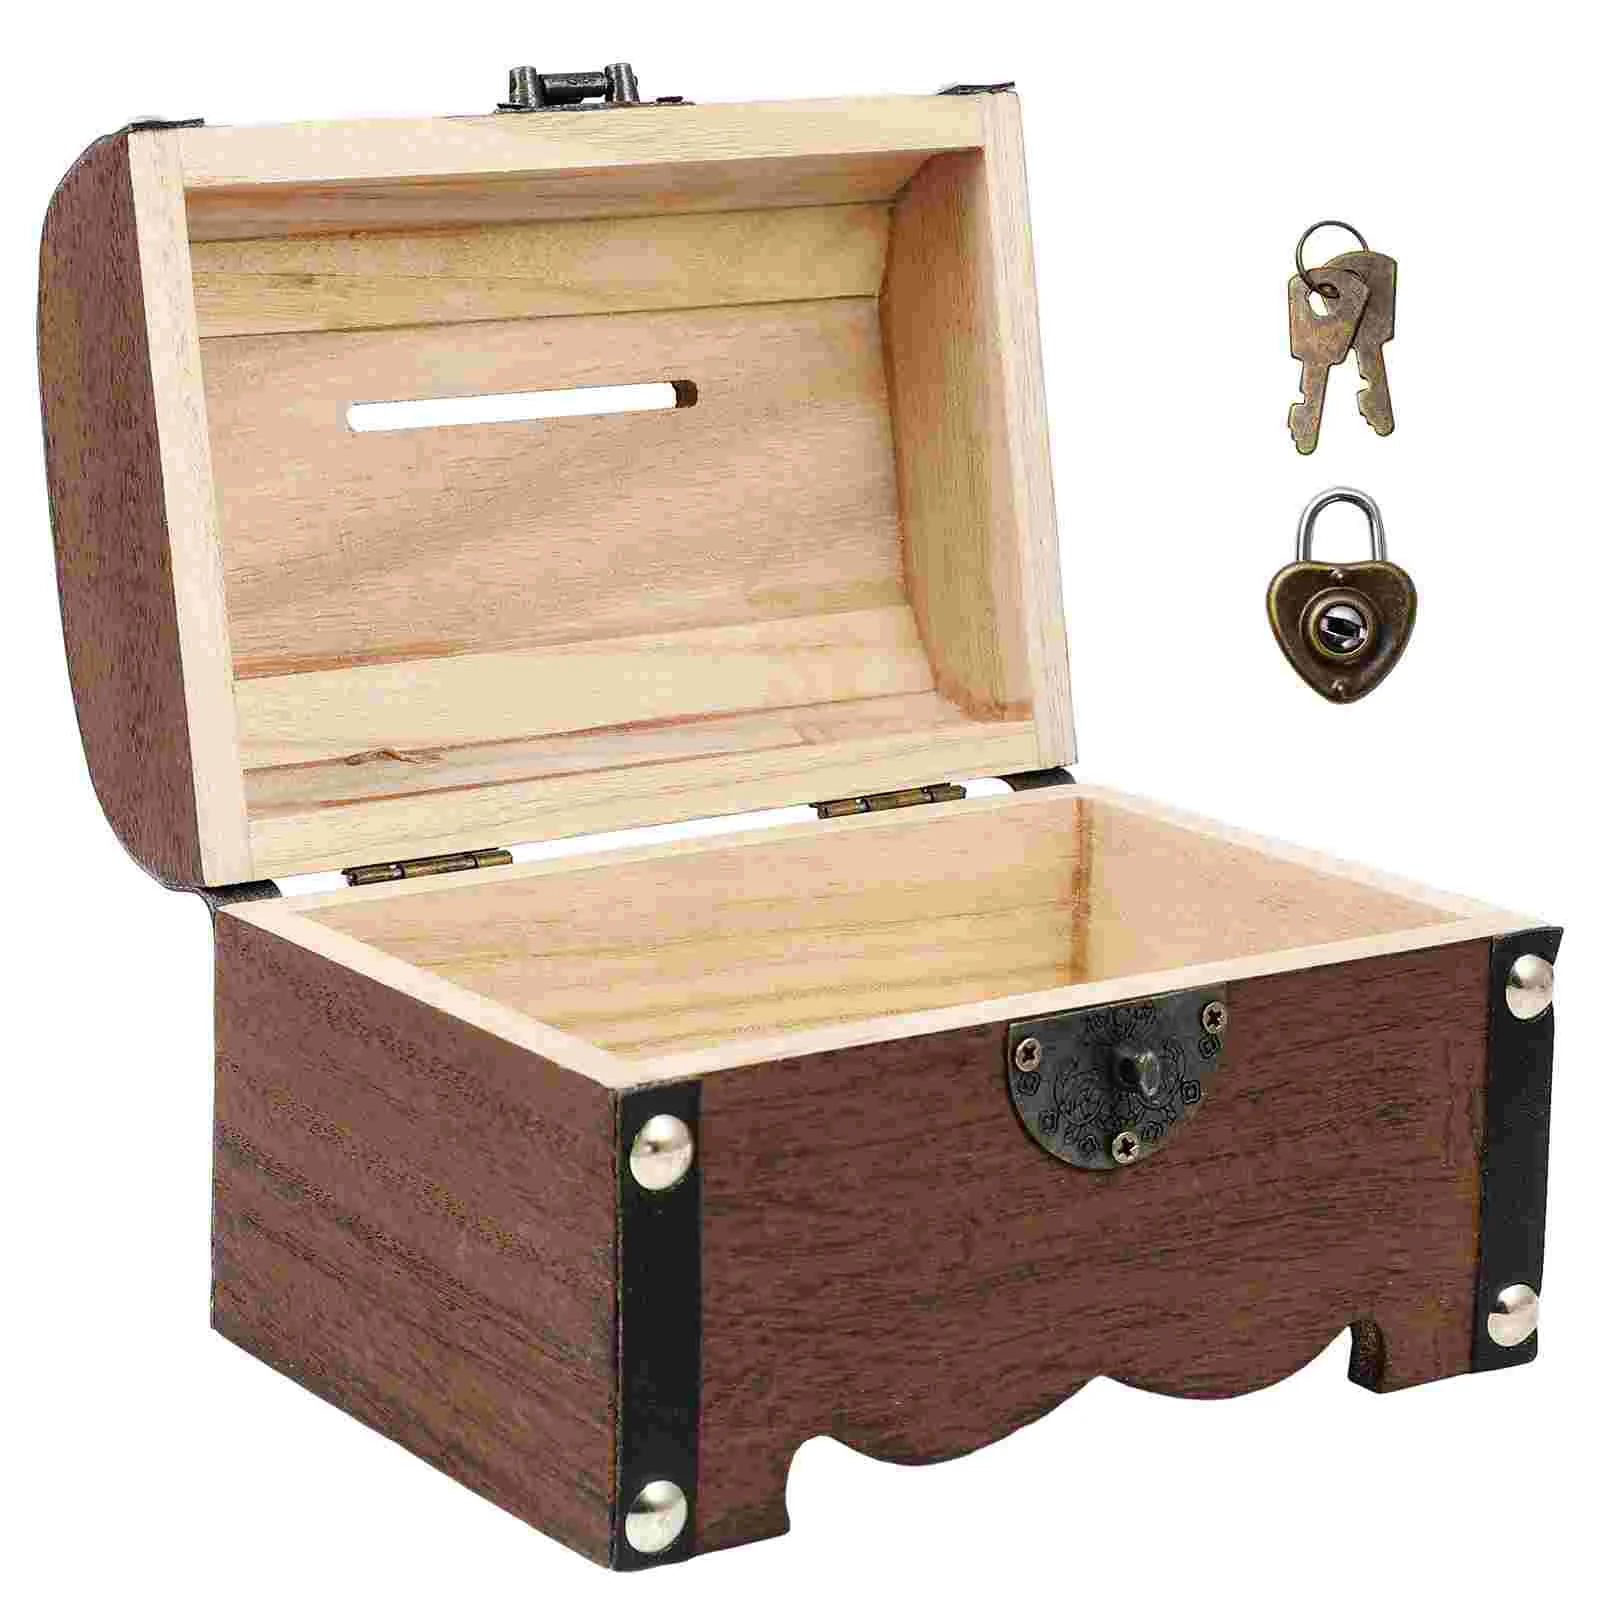 

Wooden Piggy Bank Vintage Treasure Chest Storage Box Lock Keys Decorative Small Money Saving Box Retro Home Decor Party Gifts